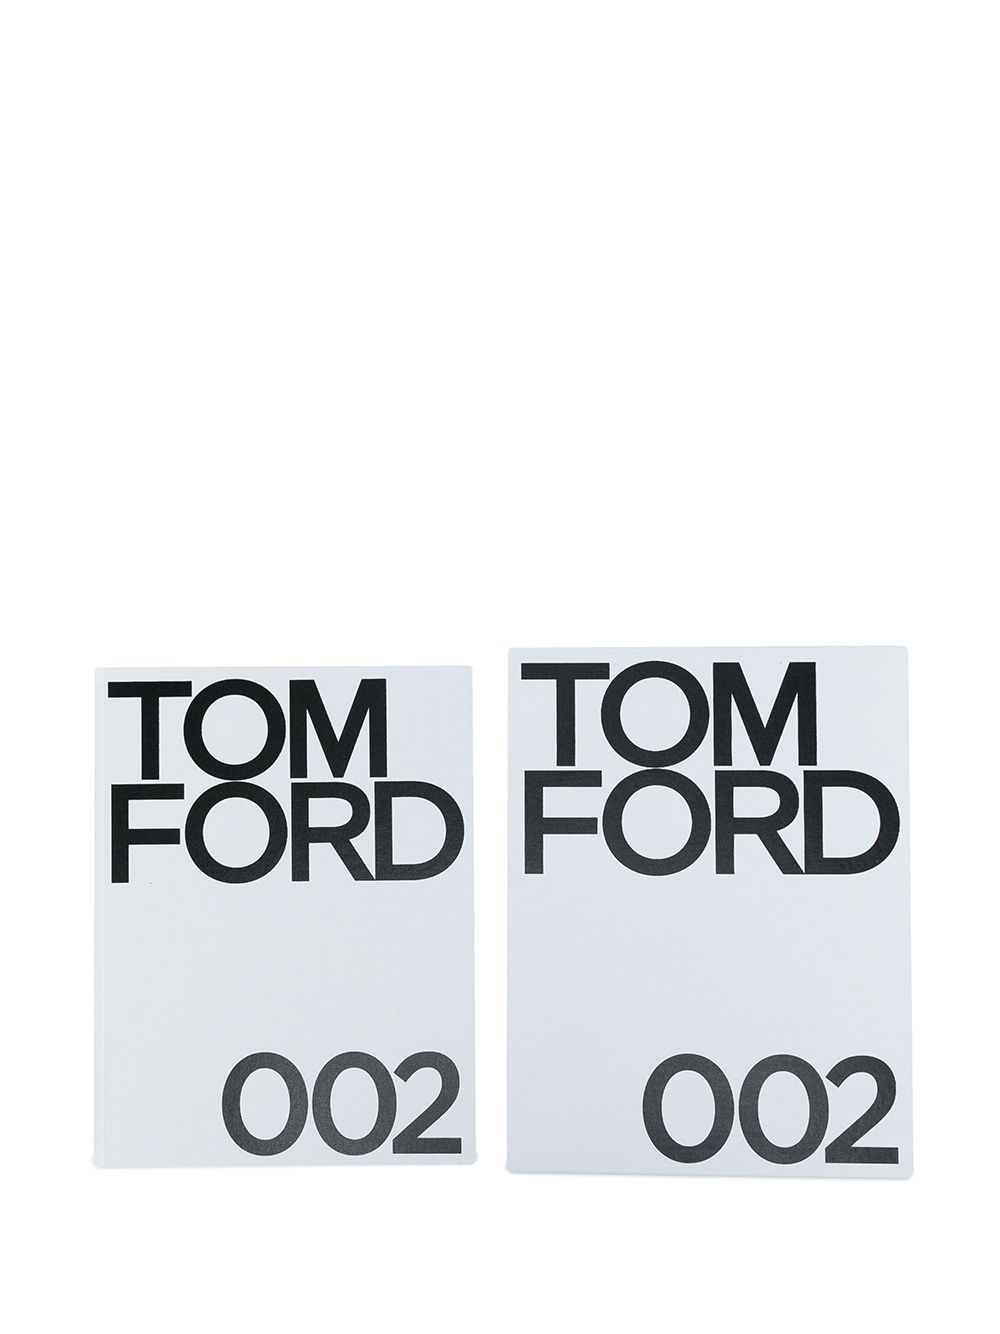 Tom Ford 002 – Studio Collektif